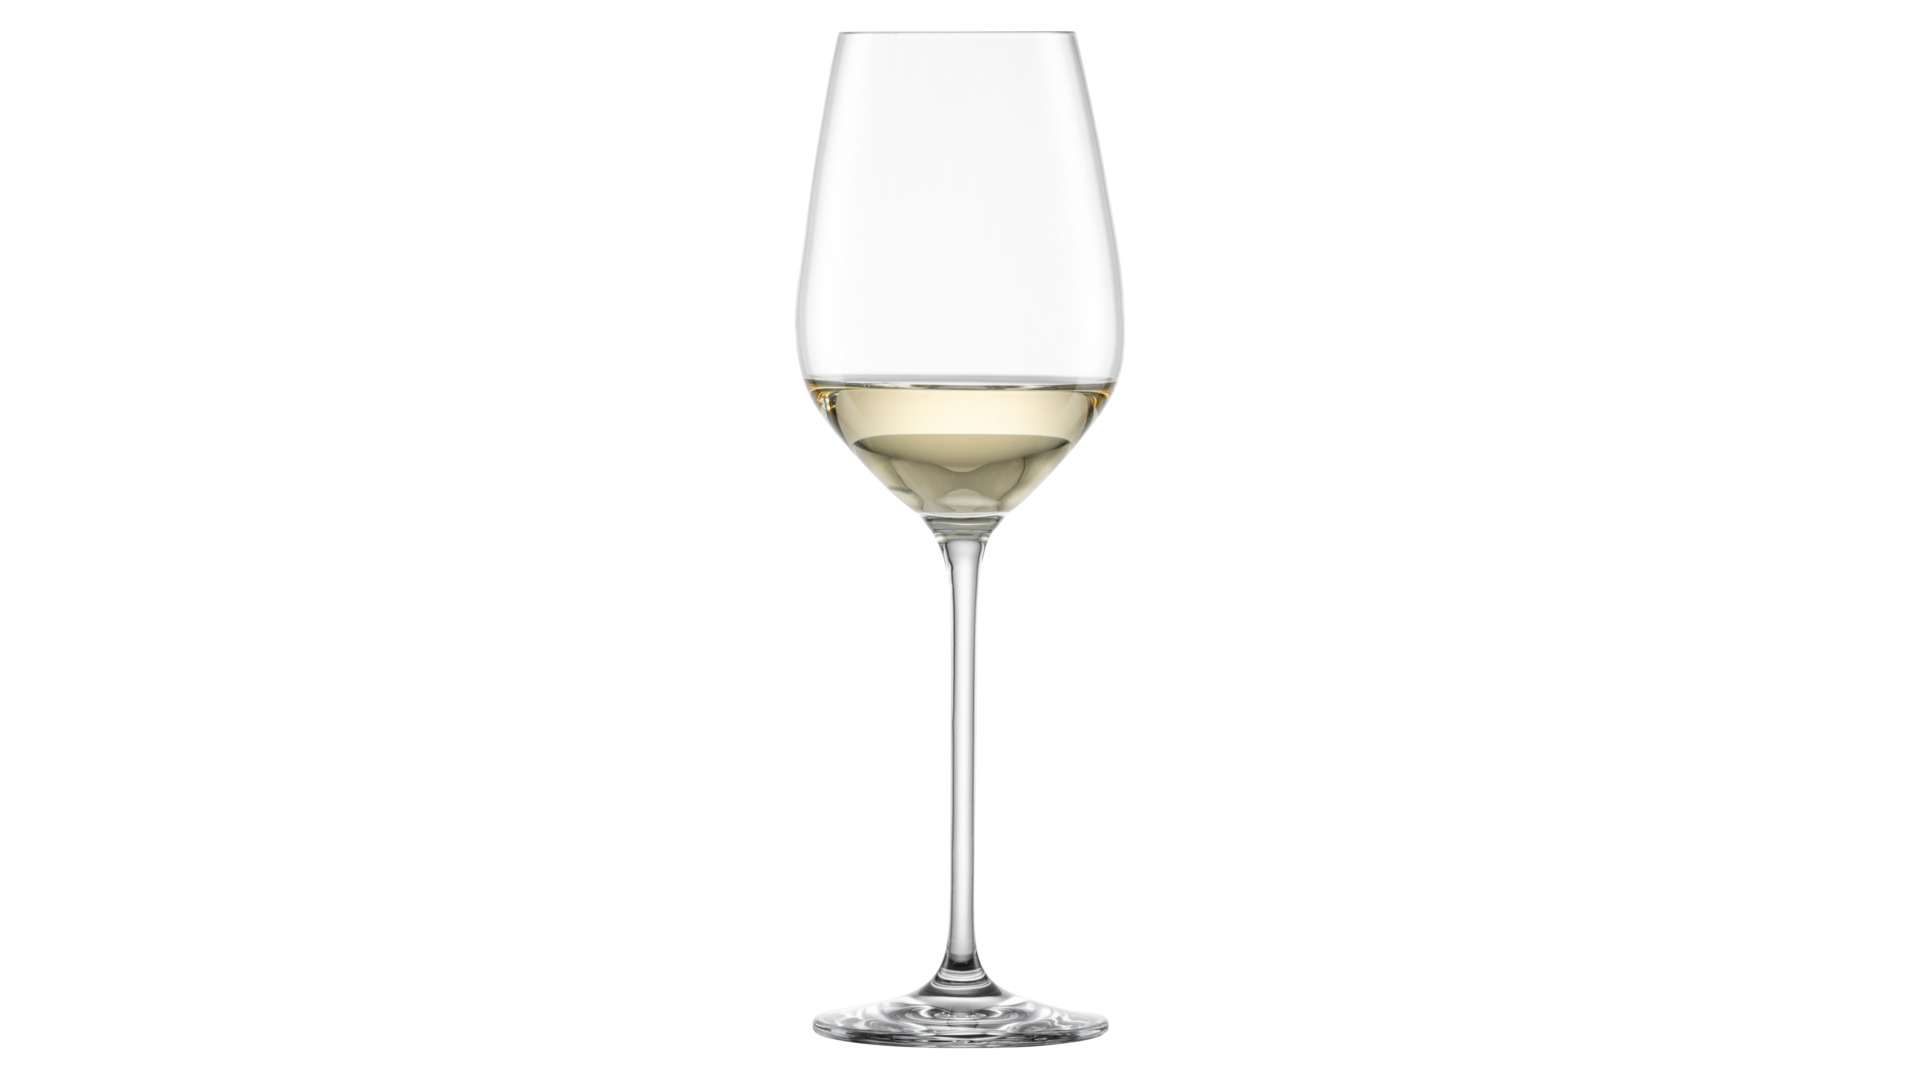 Набор бокалов для белого вина Schott Zwiesel Fortissimo 420 мл, 6 шт